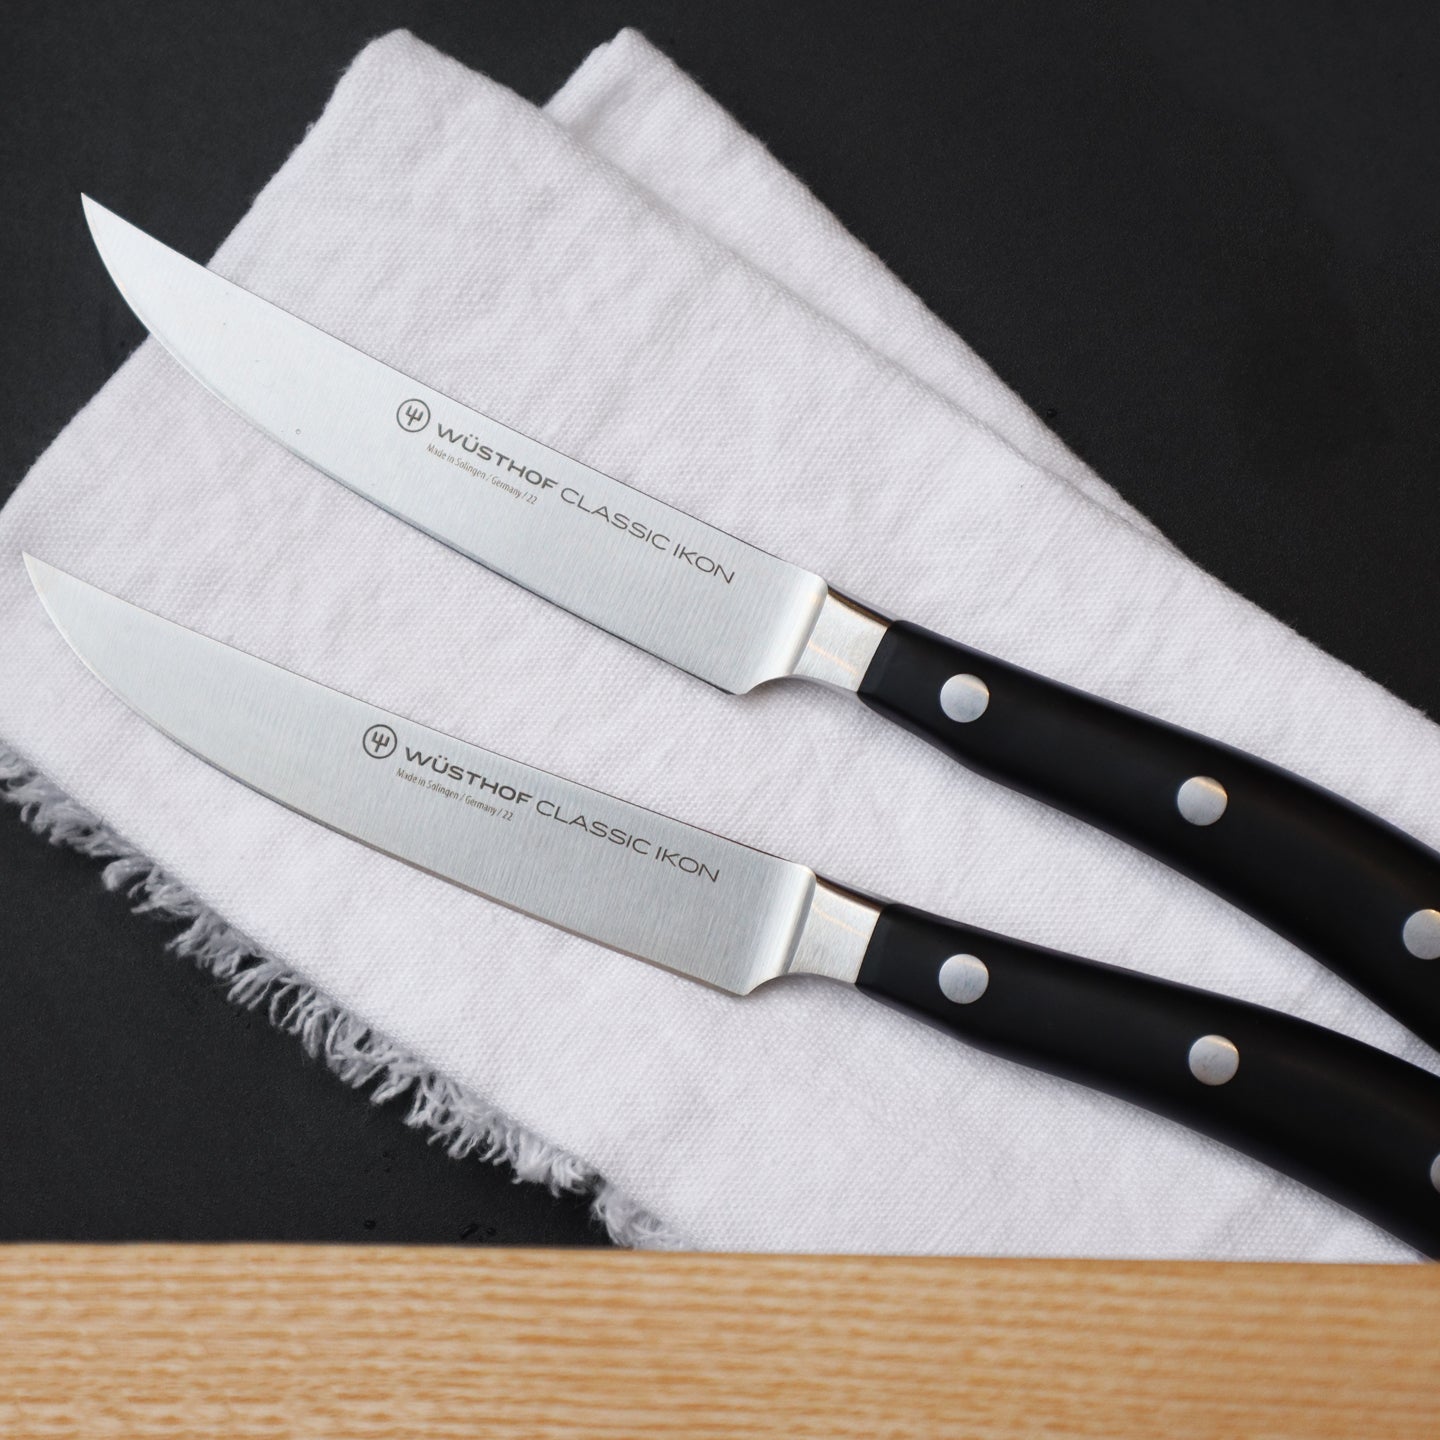 Wüsthof Classic Ikon Steak Knives with Box - Set of 4